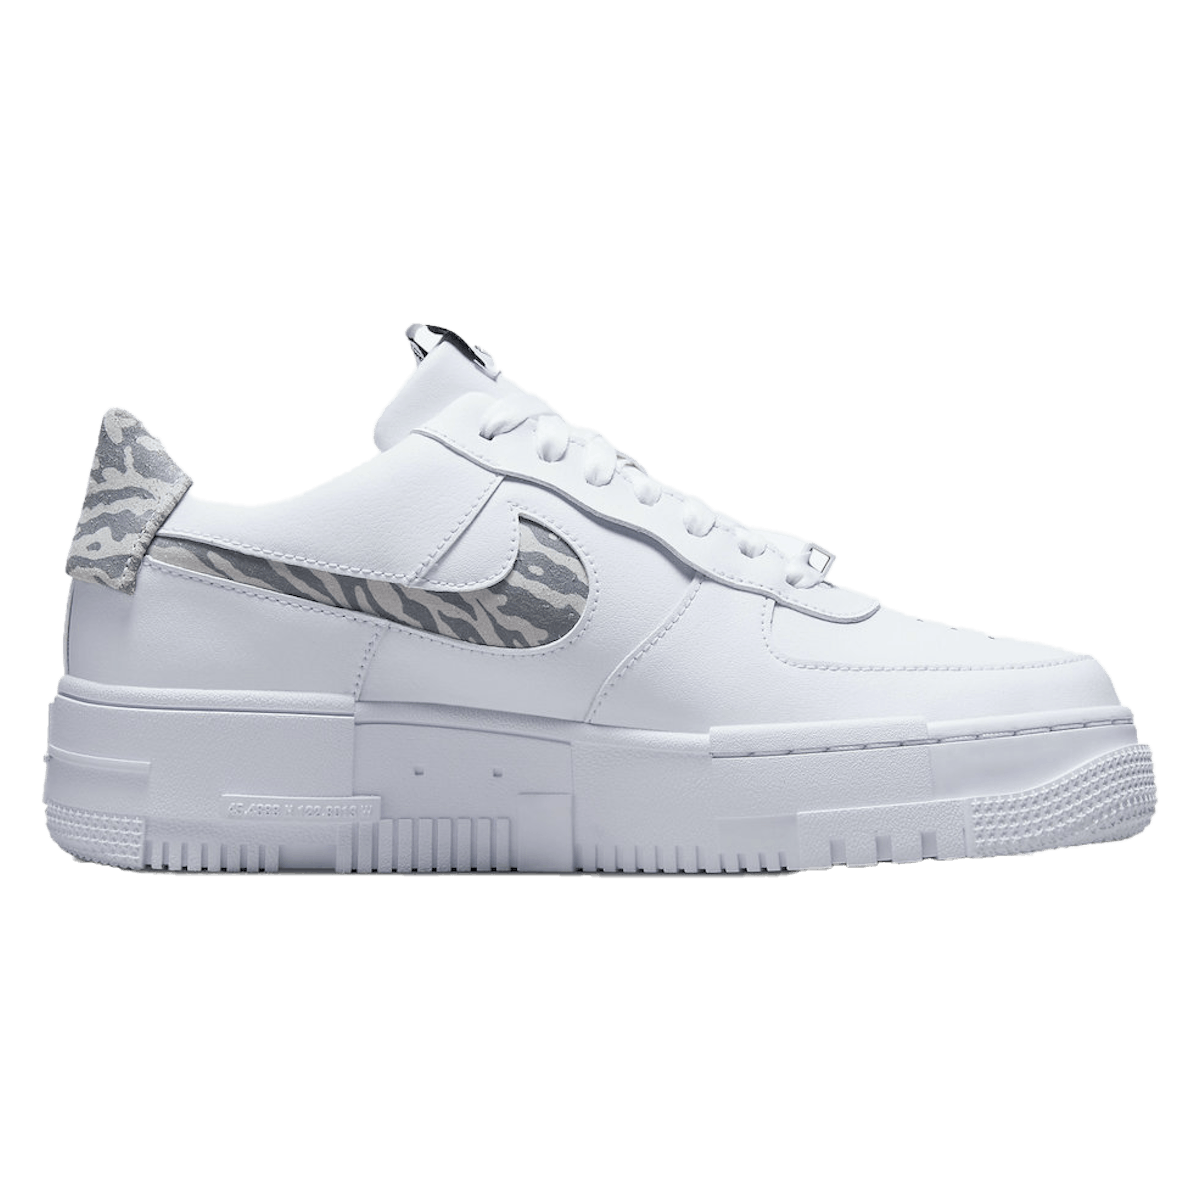 Nike Air Force 1 Low Pixel "Zebra"